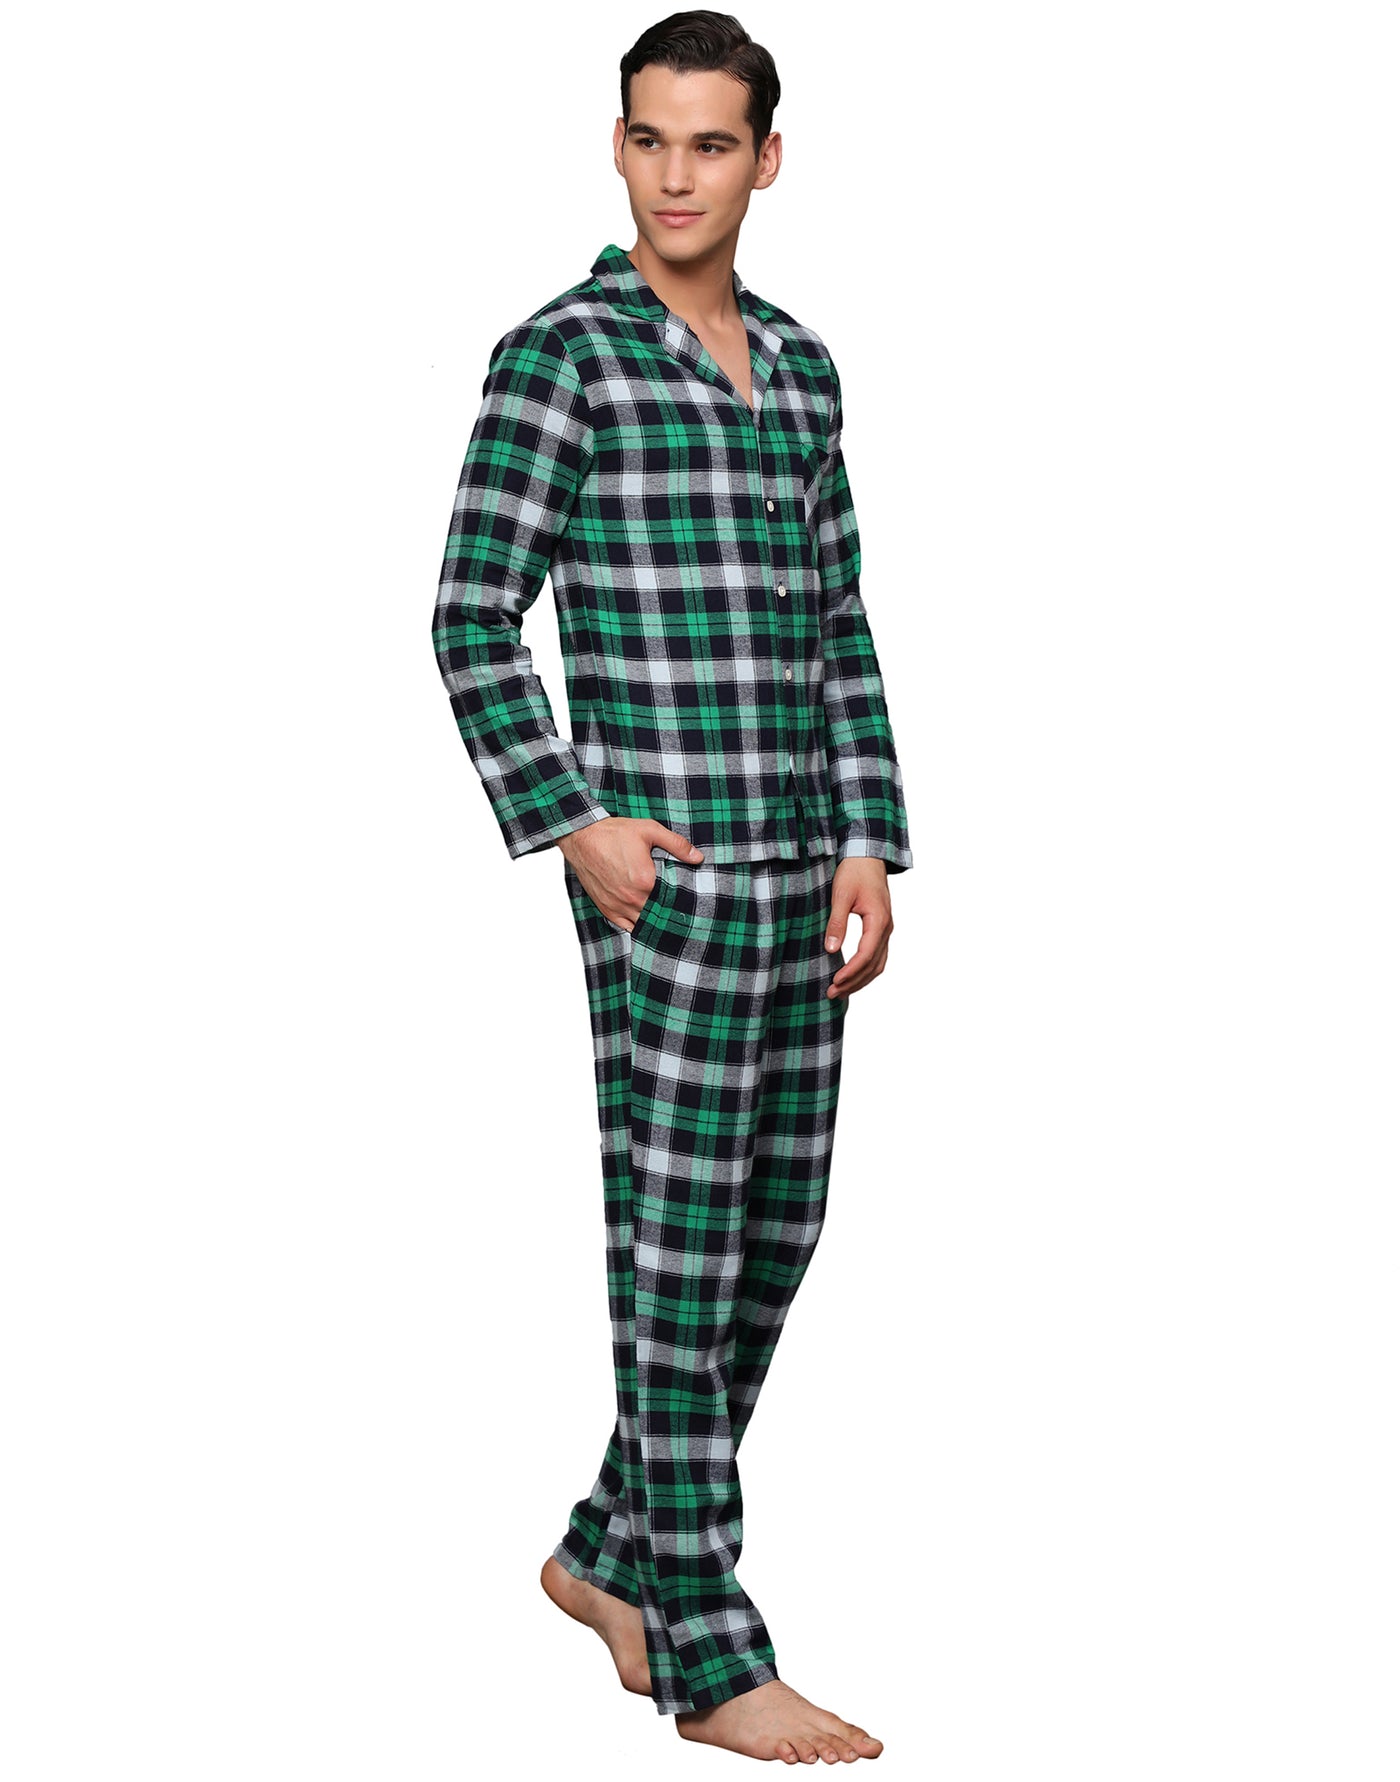 Pyjama Set for Men-Green Checked